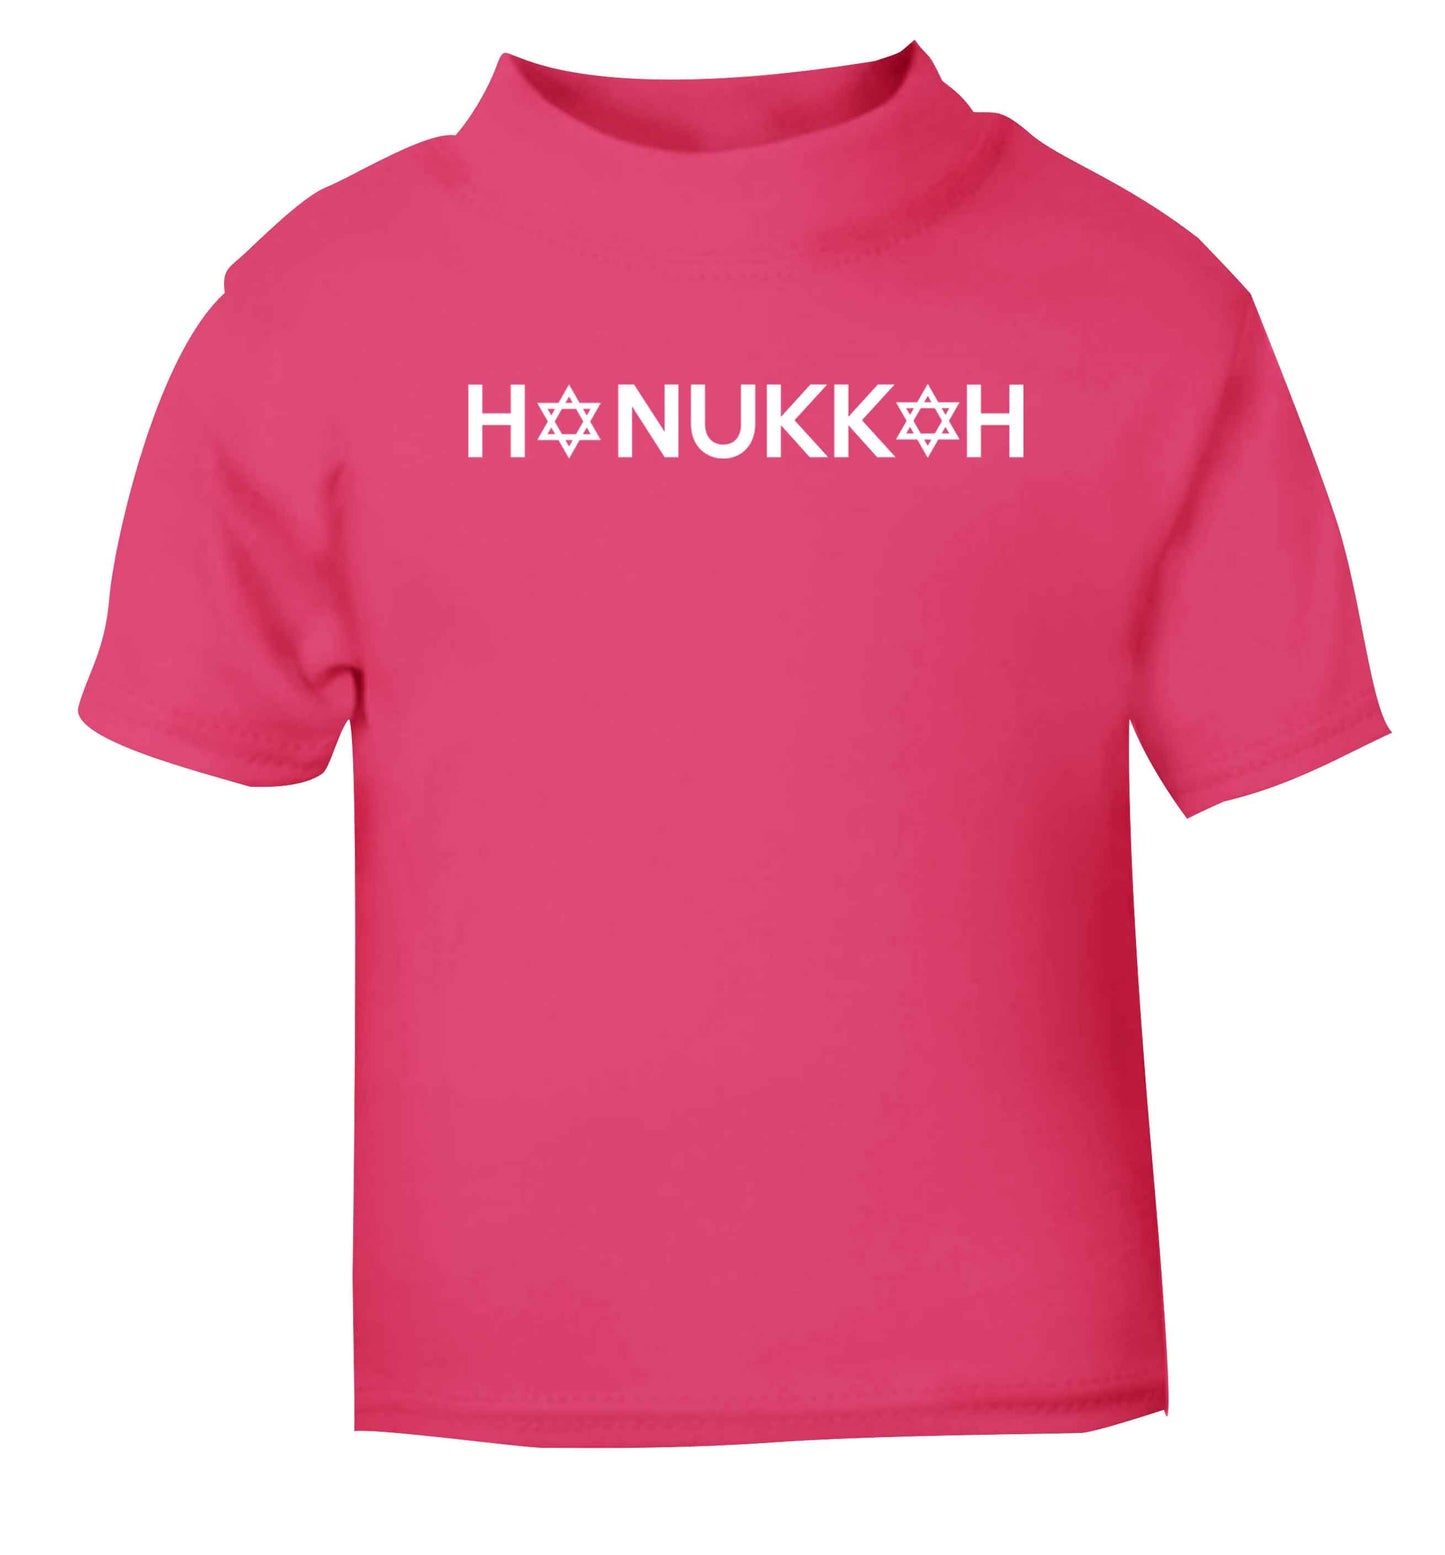 Hanukkah star of david pink baby toddler Tshirt 2 Years